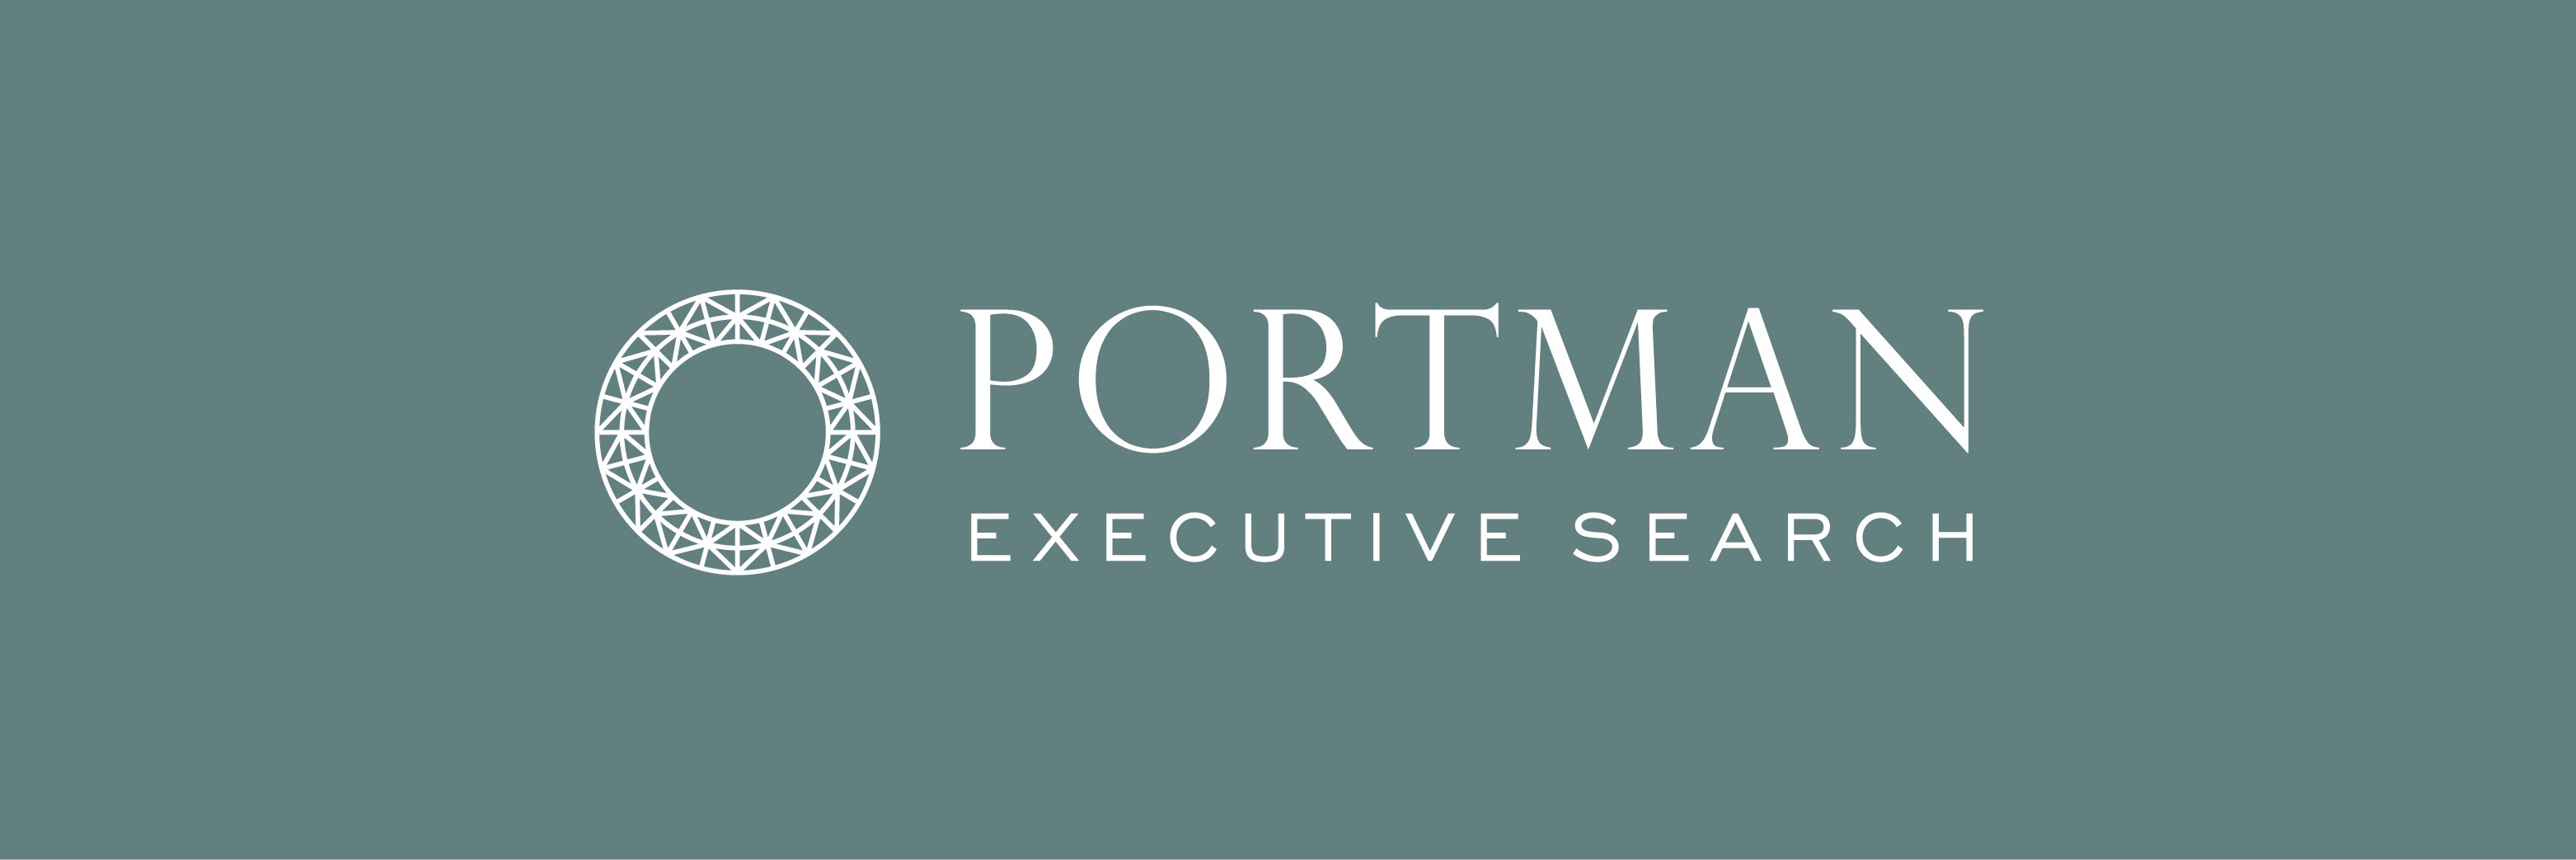 Portman Partners